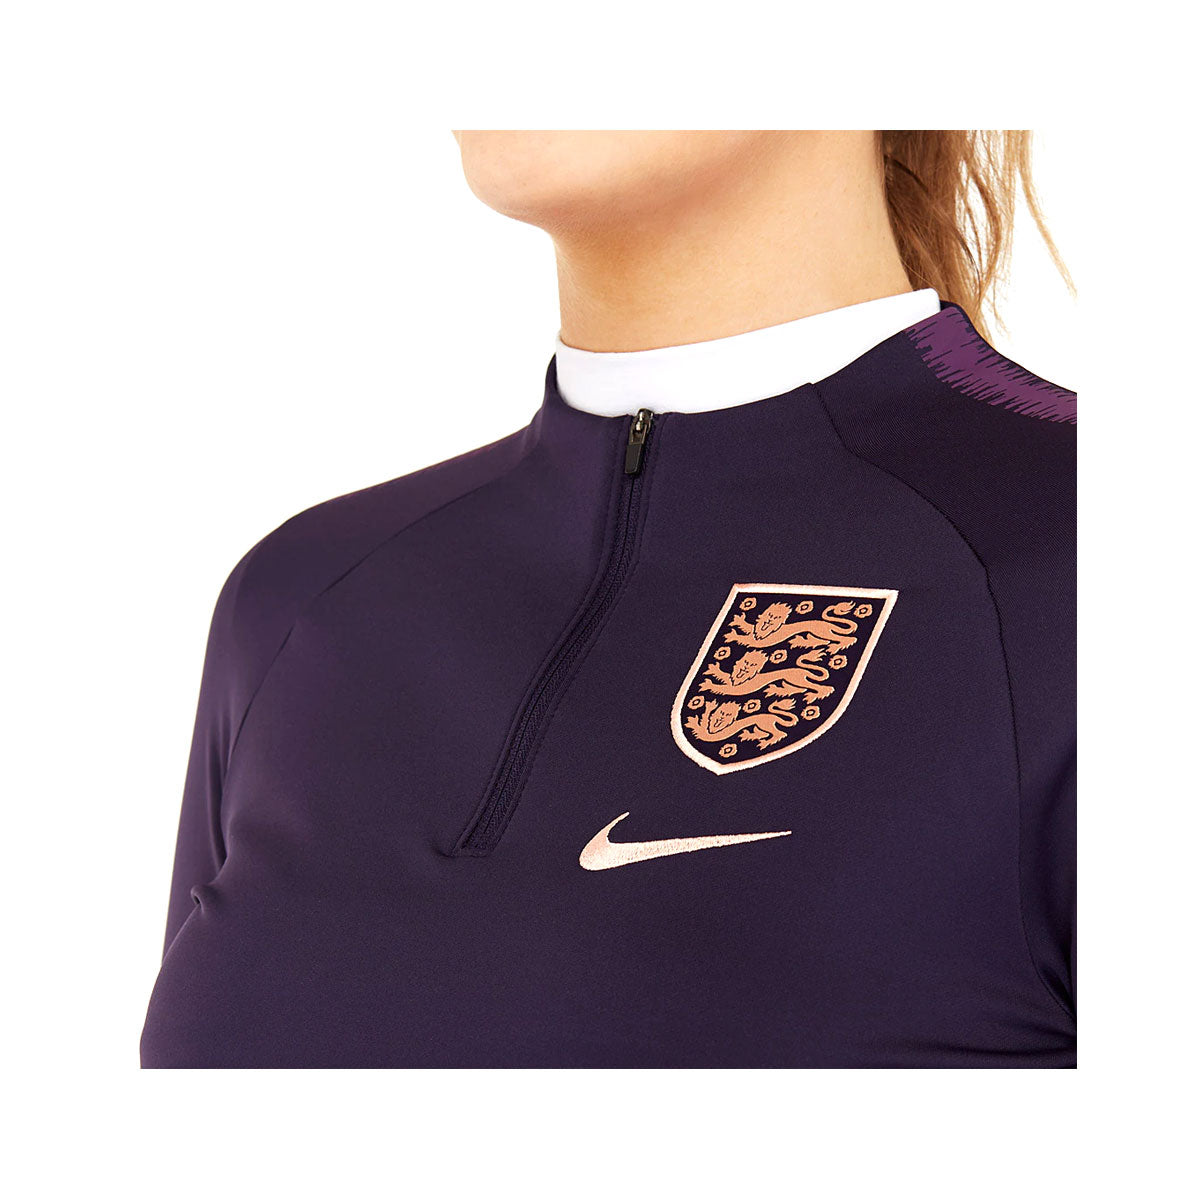 Nike Women's World Cup England 2019 Top